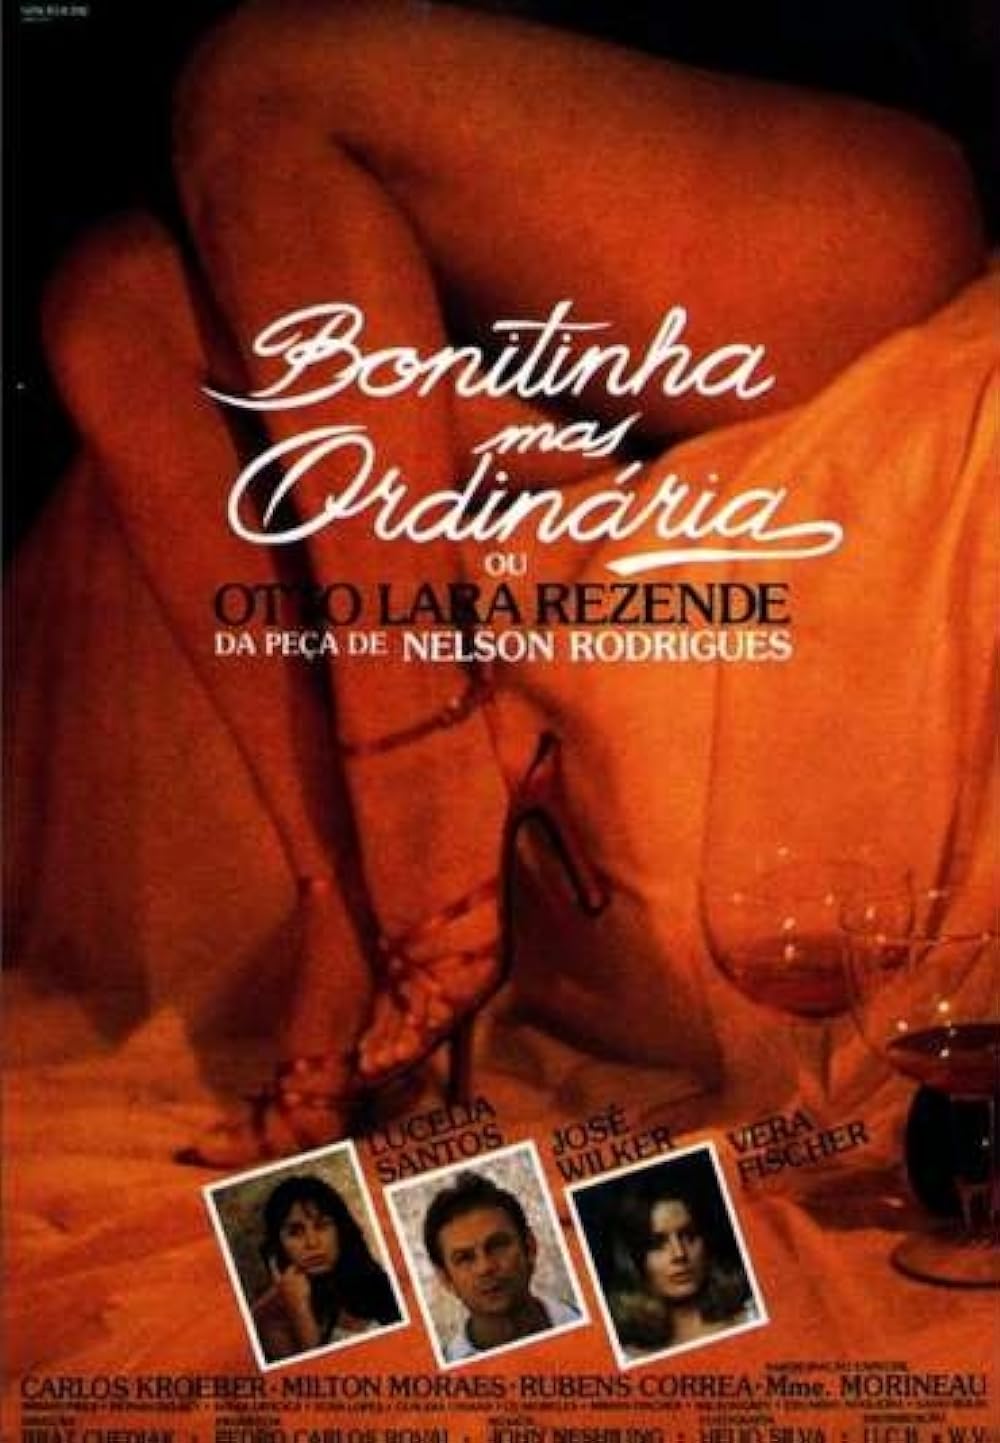 Bonitinha Mas Ordinária ou Otto Lara Rezende (1981) 480p HDRip Portuguese Adult Movie [400MB]